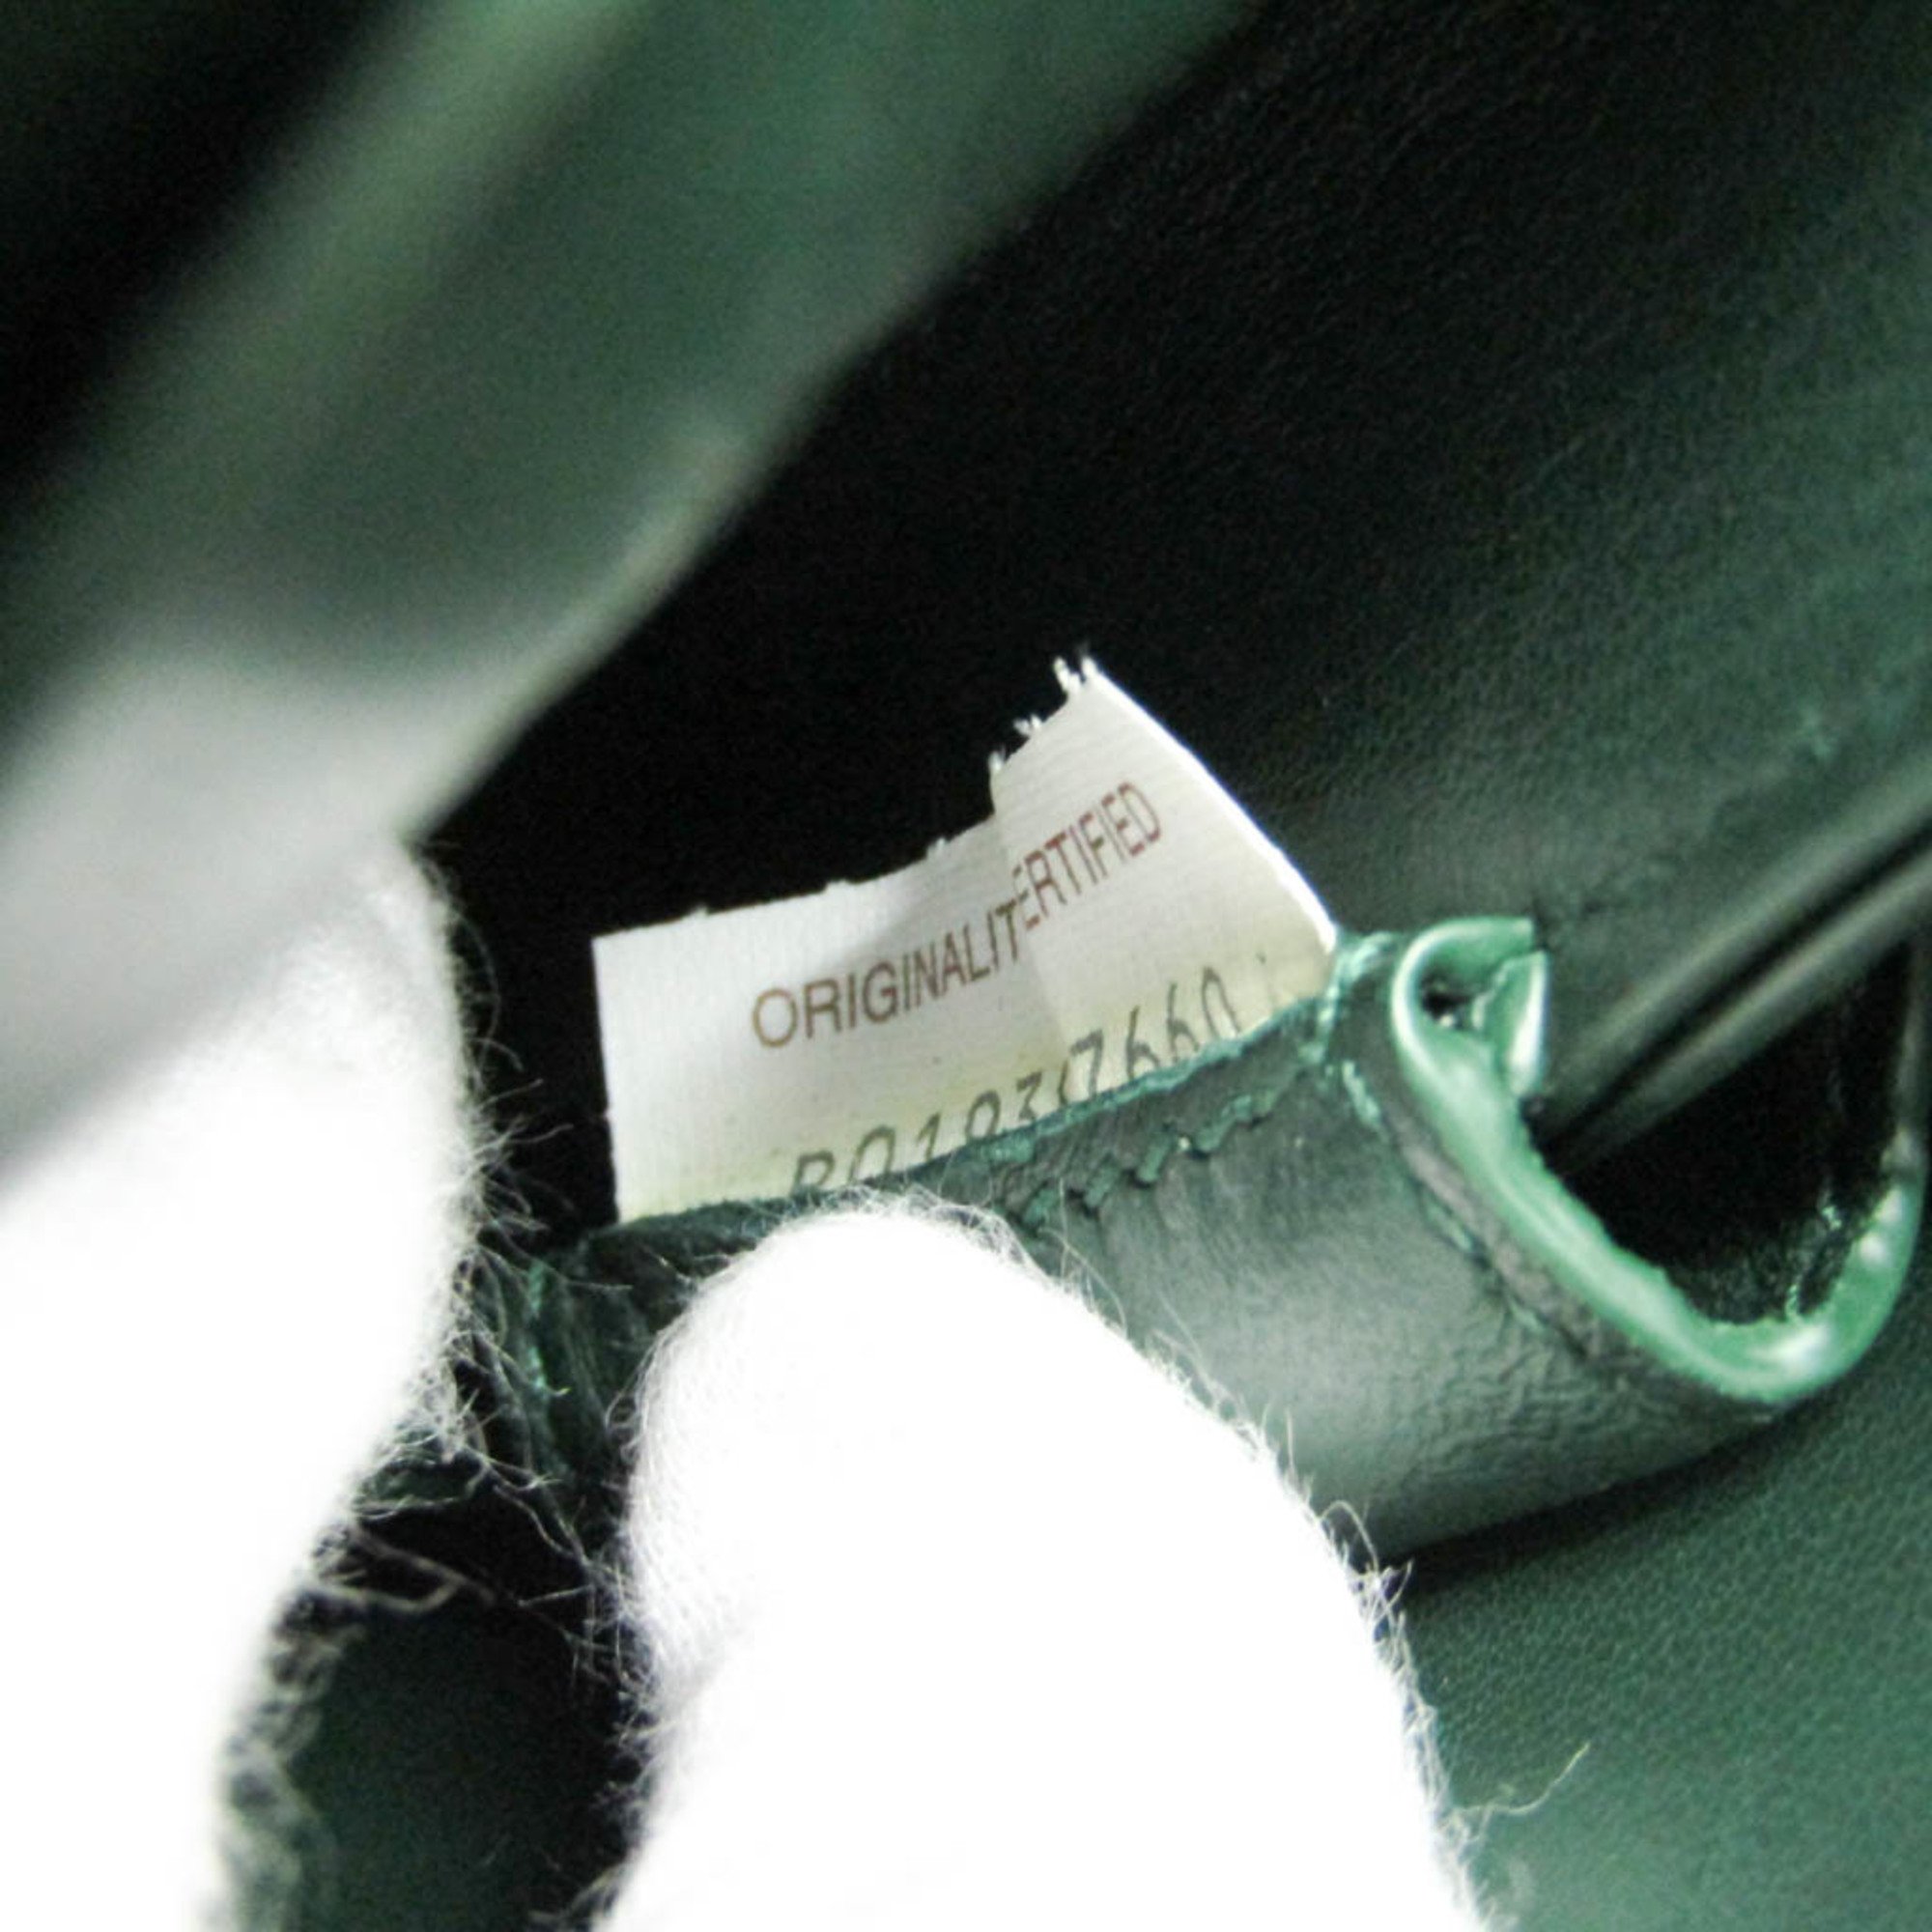 Bottega Veneta Mount Women's Leather Shoulder Bag,Tote Bag Green